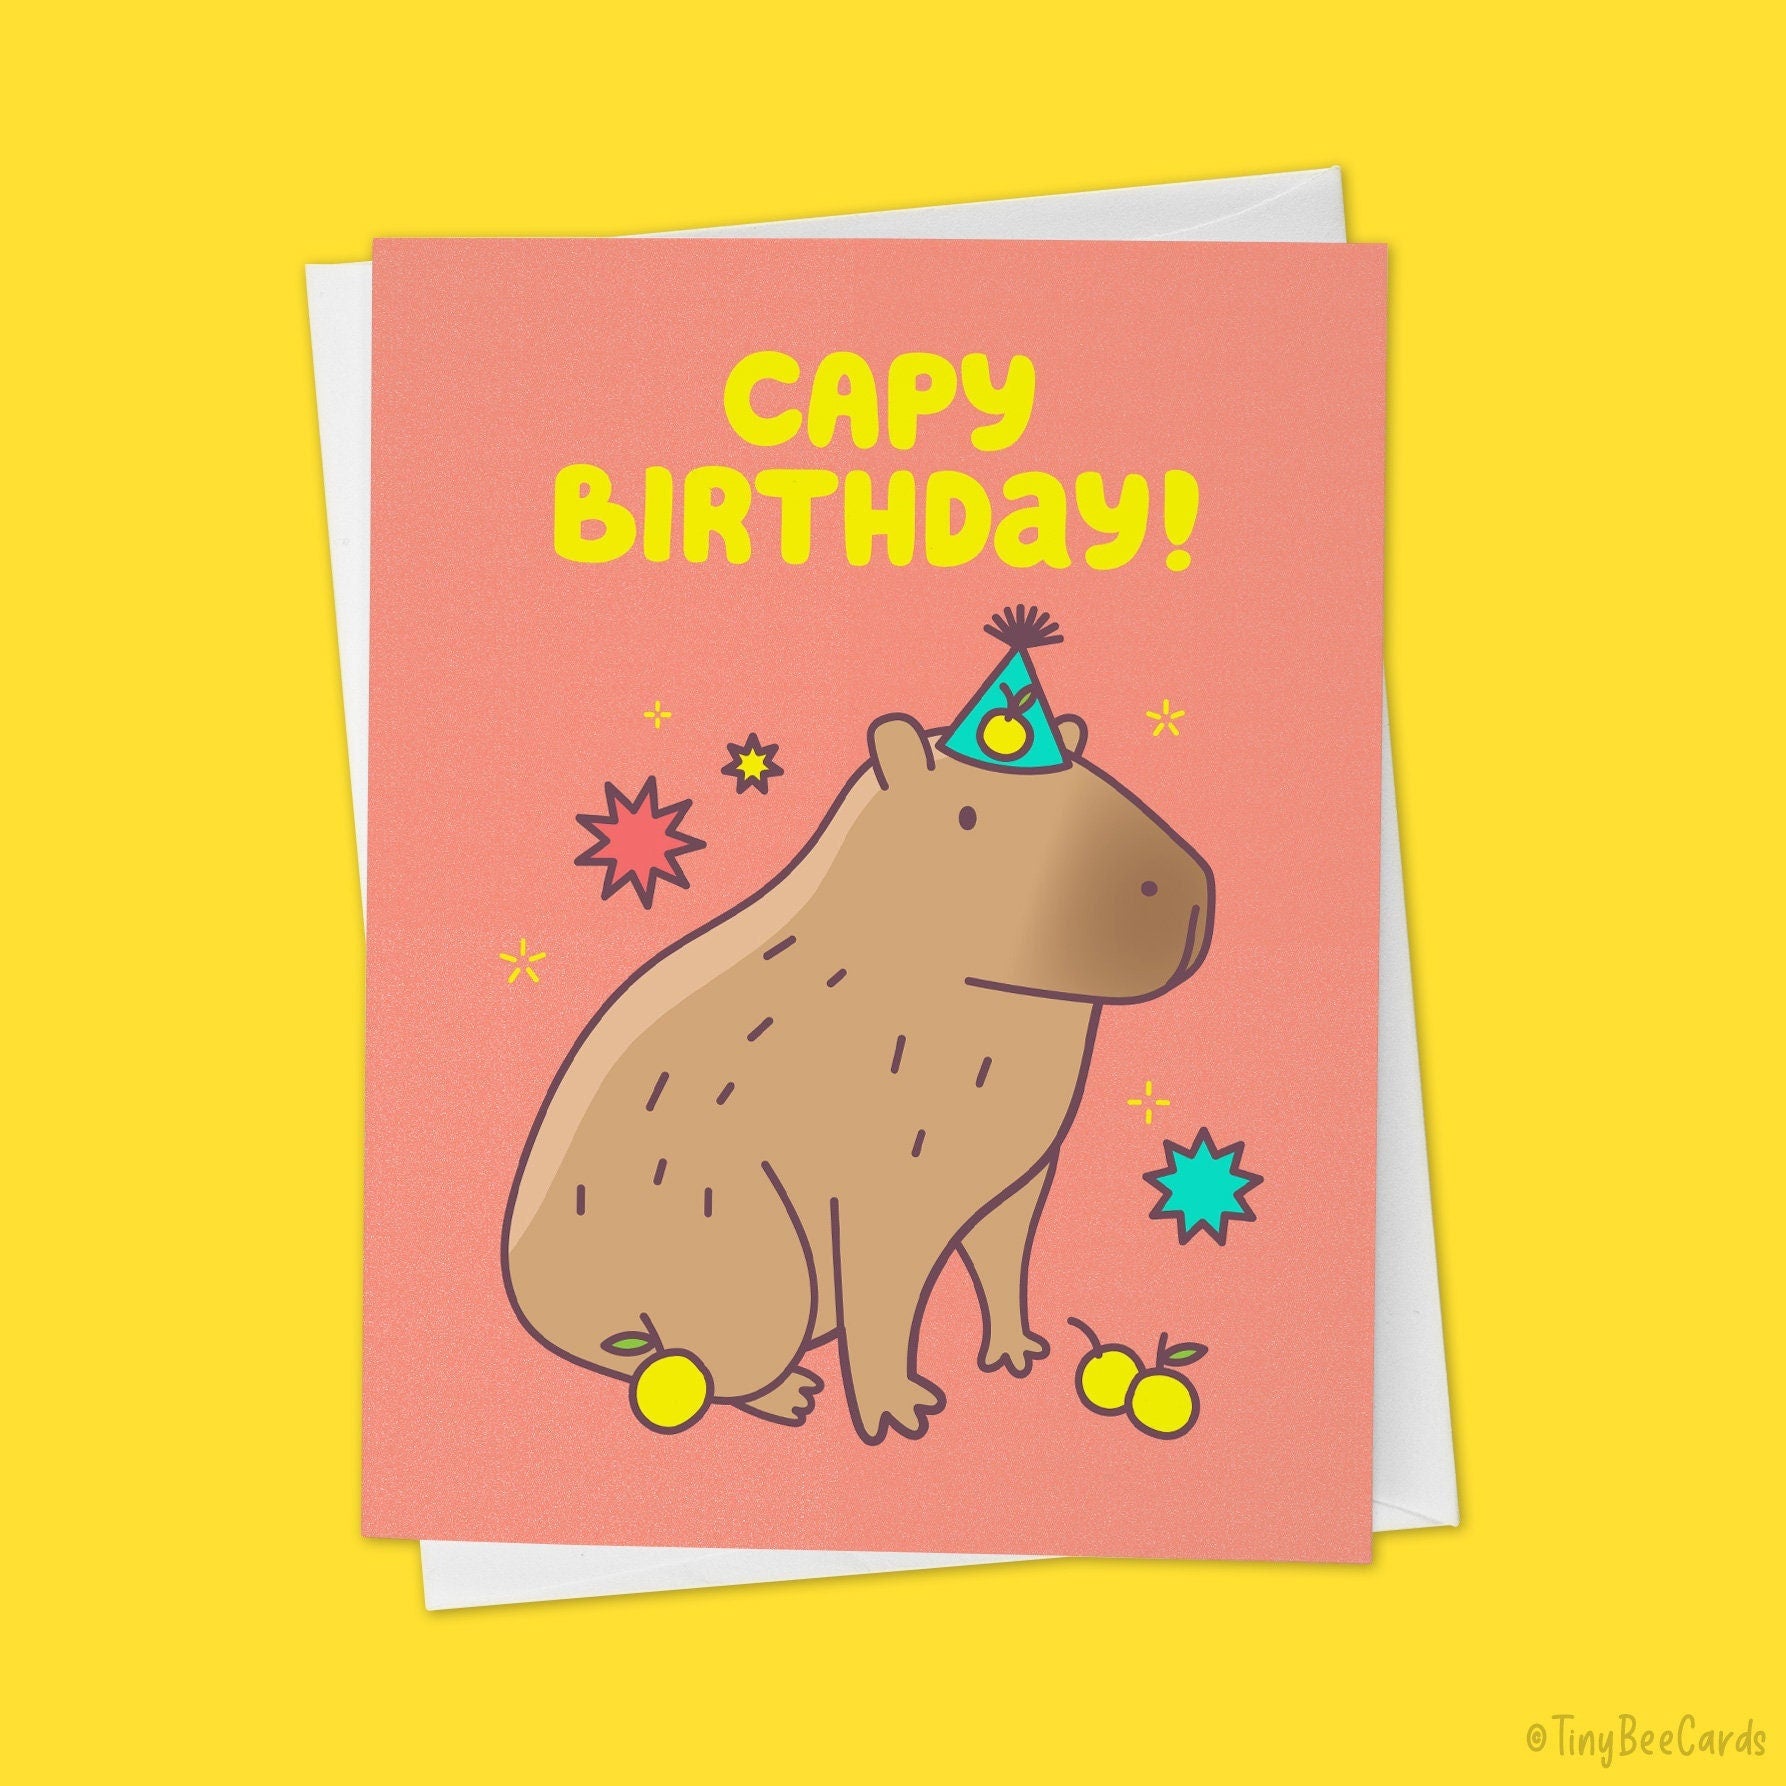 Capybara Birthday Card "Capy Birthday" - animal lover card, capybara with yuzu, funny birthday card for friend, happy birthday animal lover